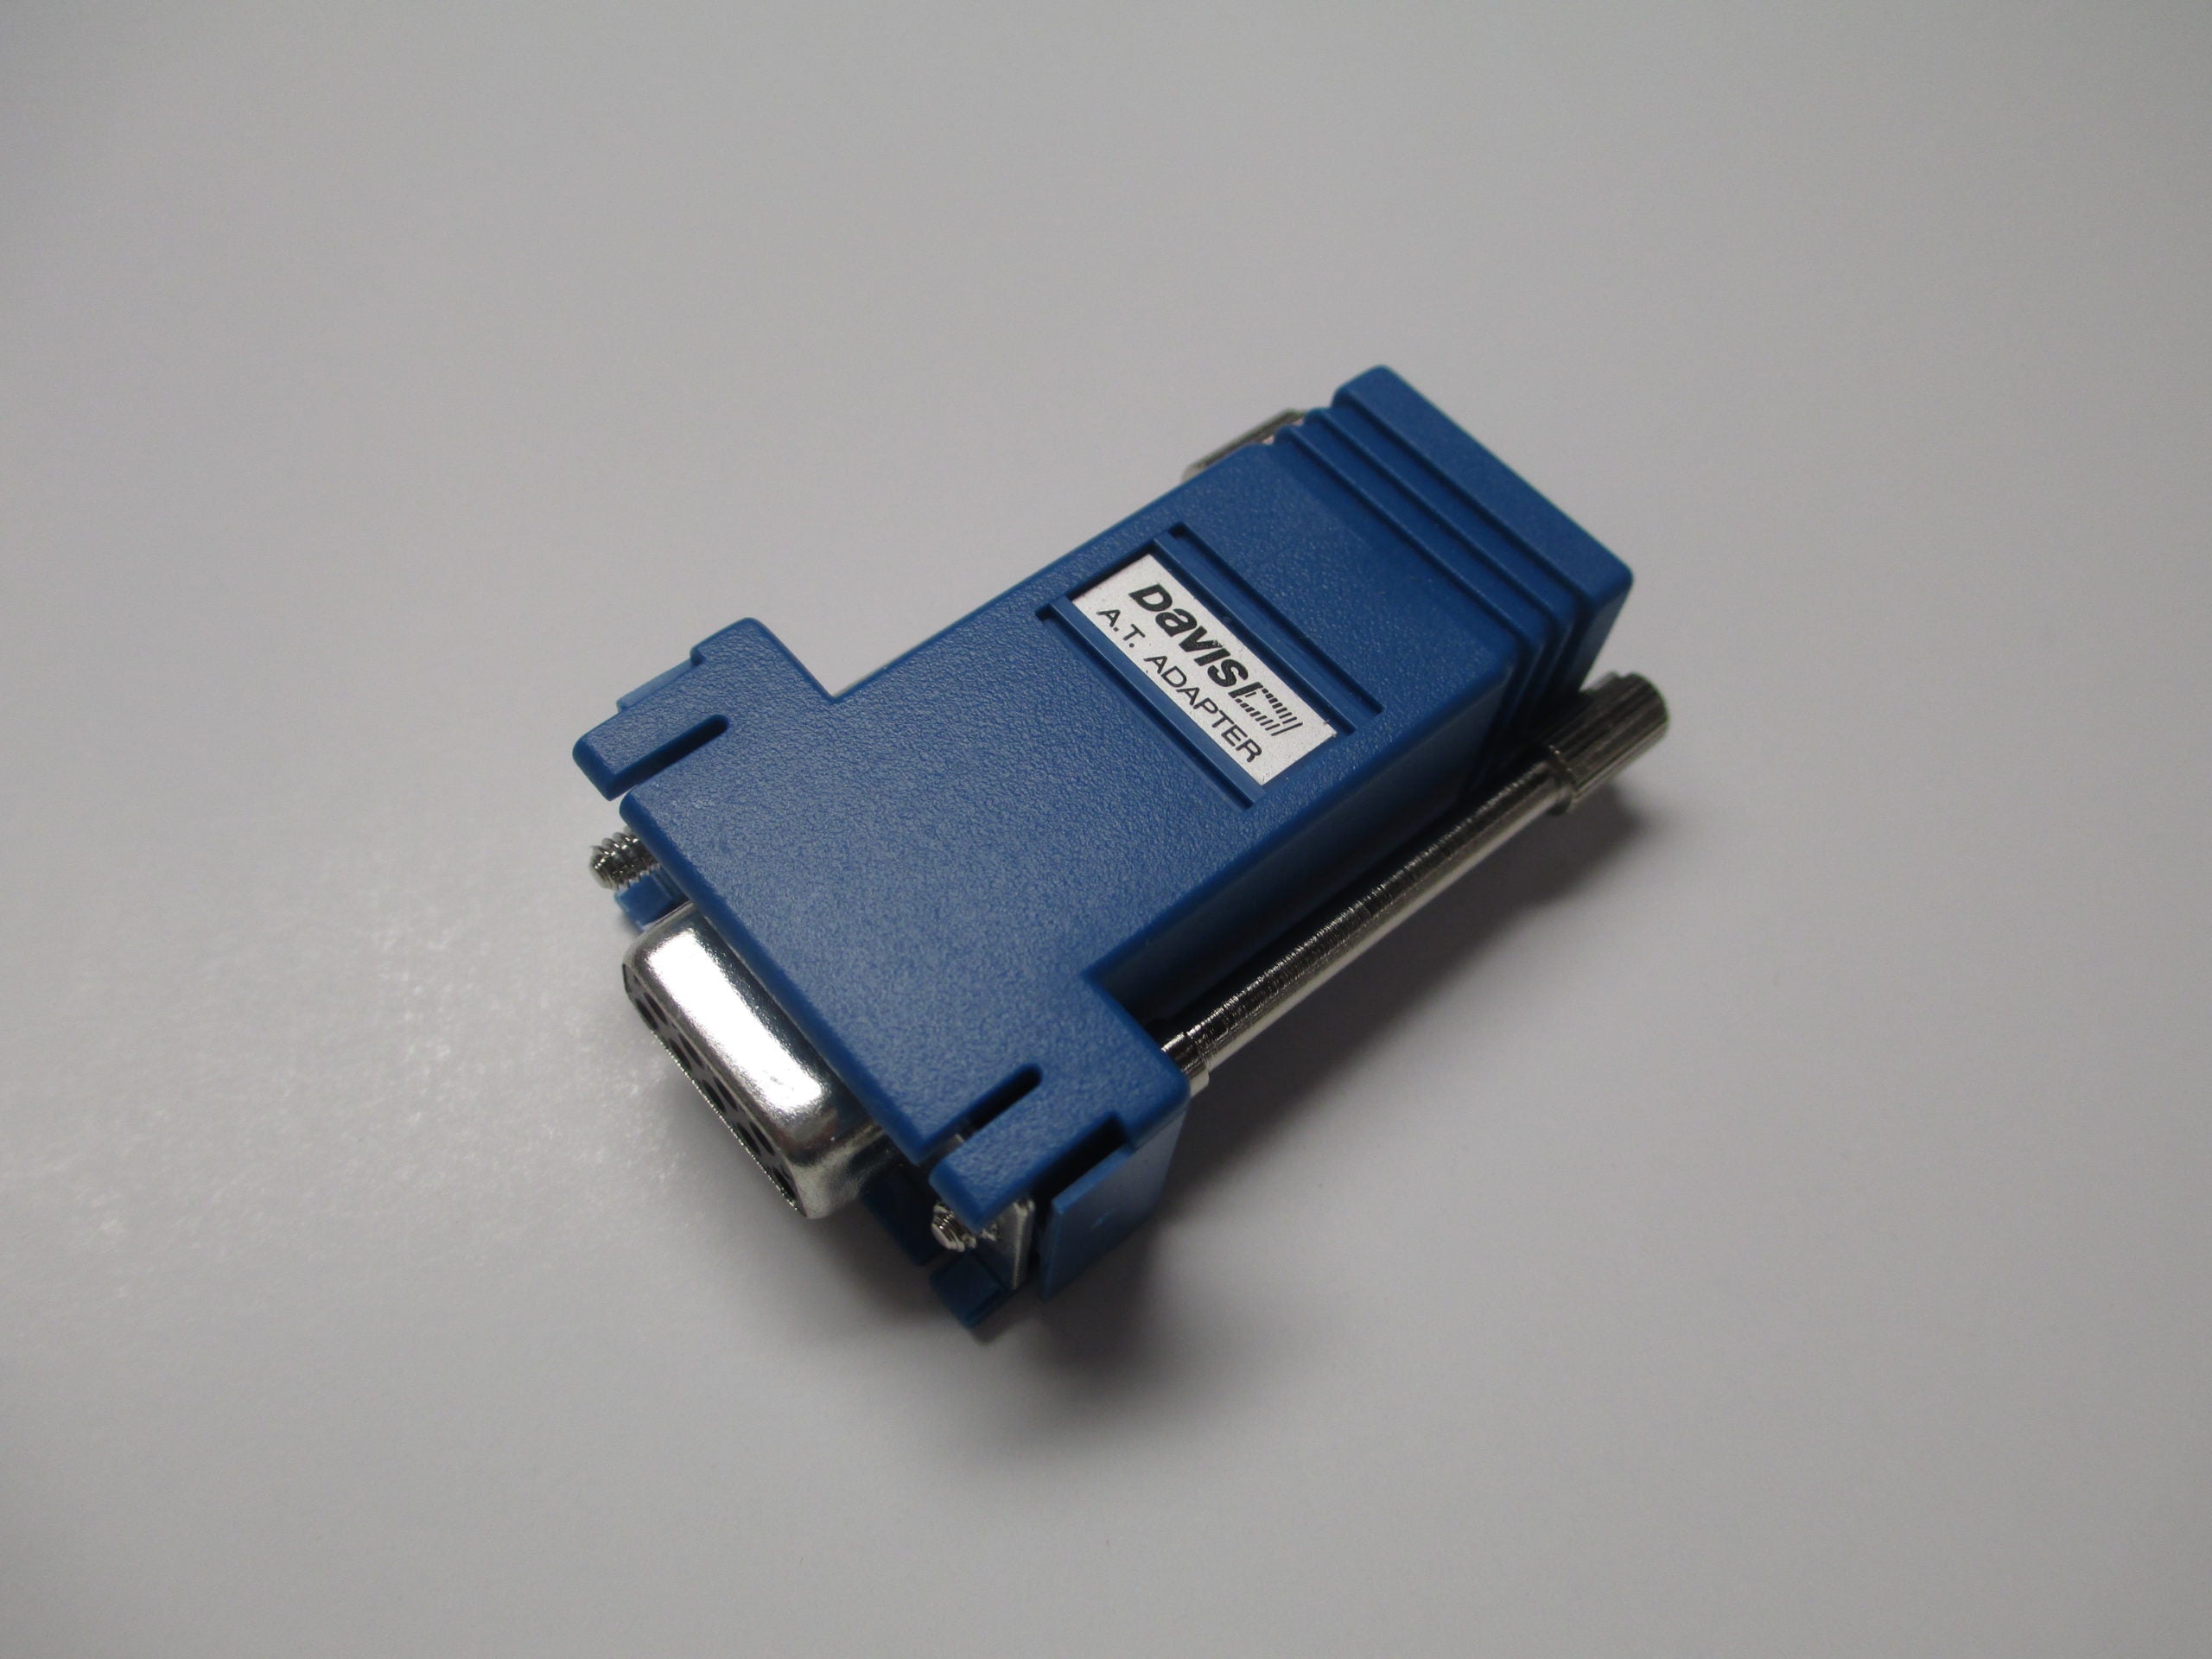 9-Pin Adapter for Serial Port WeatherLink® - SKU 7381.037